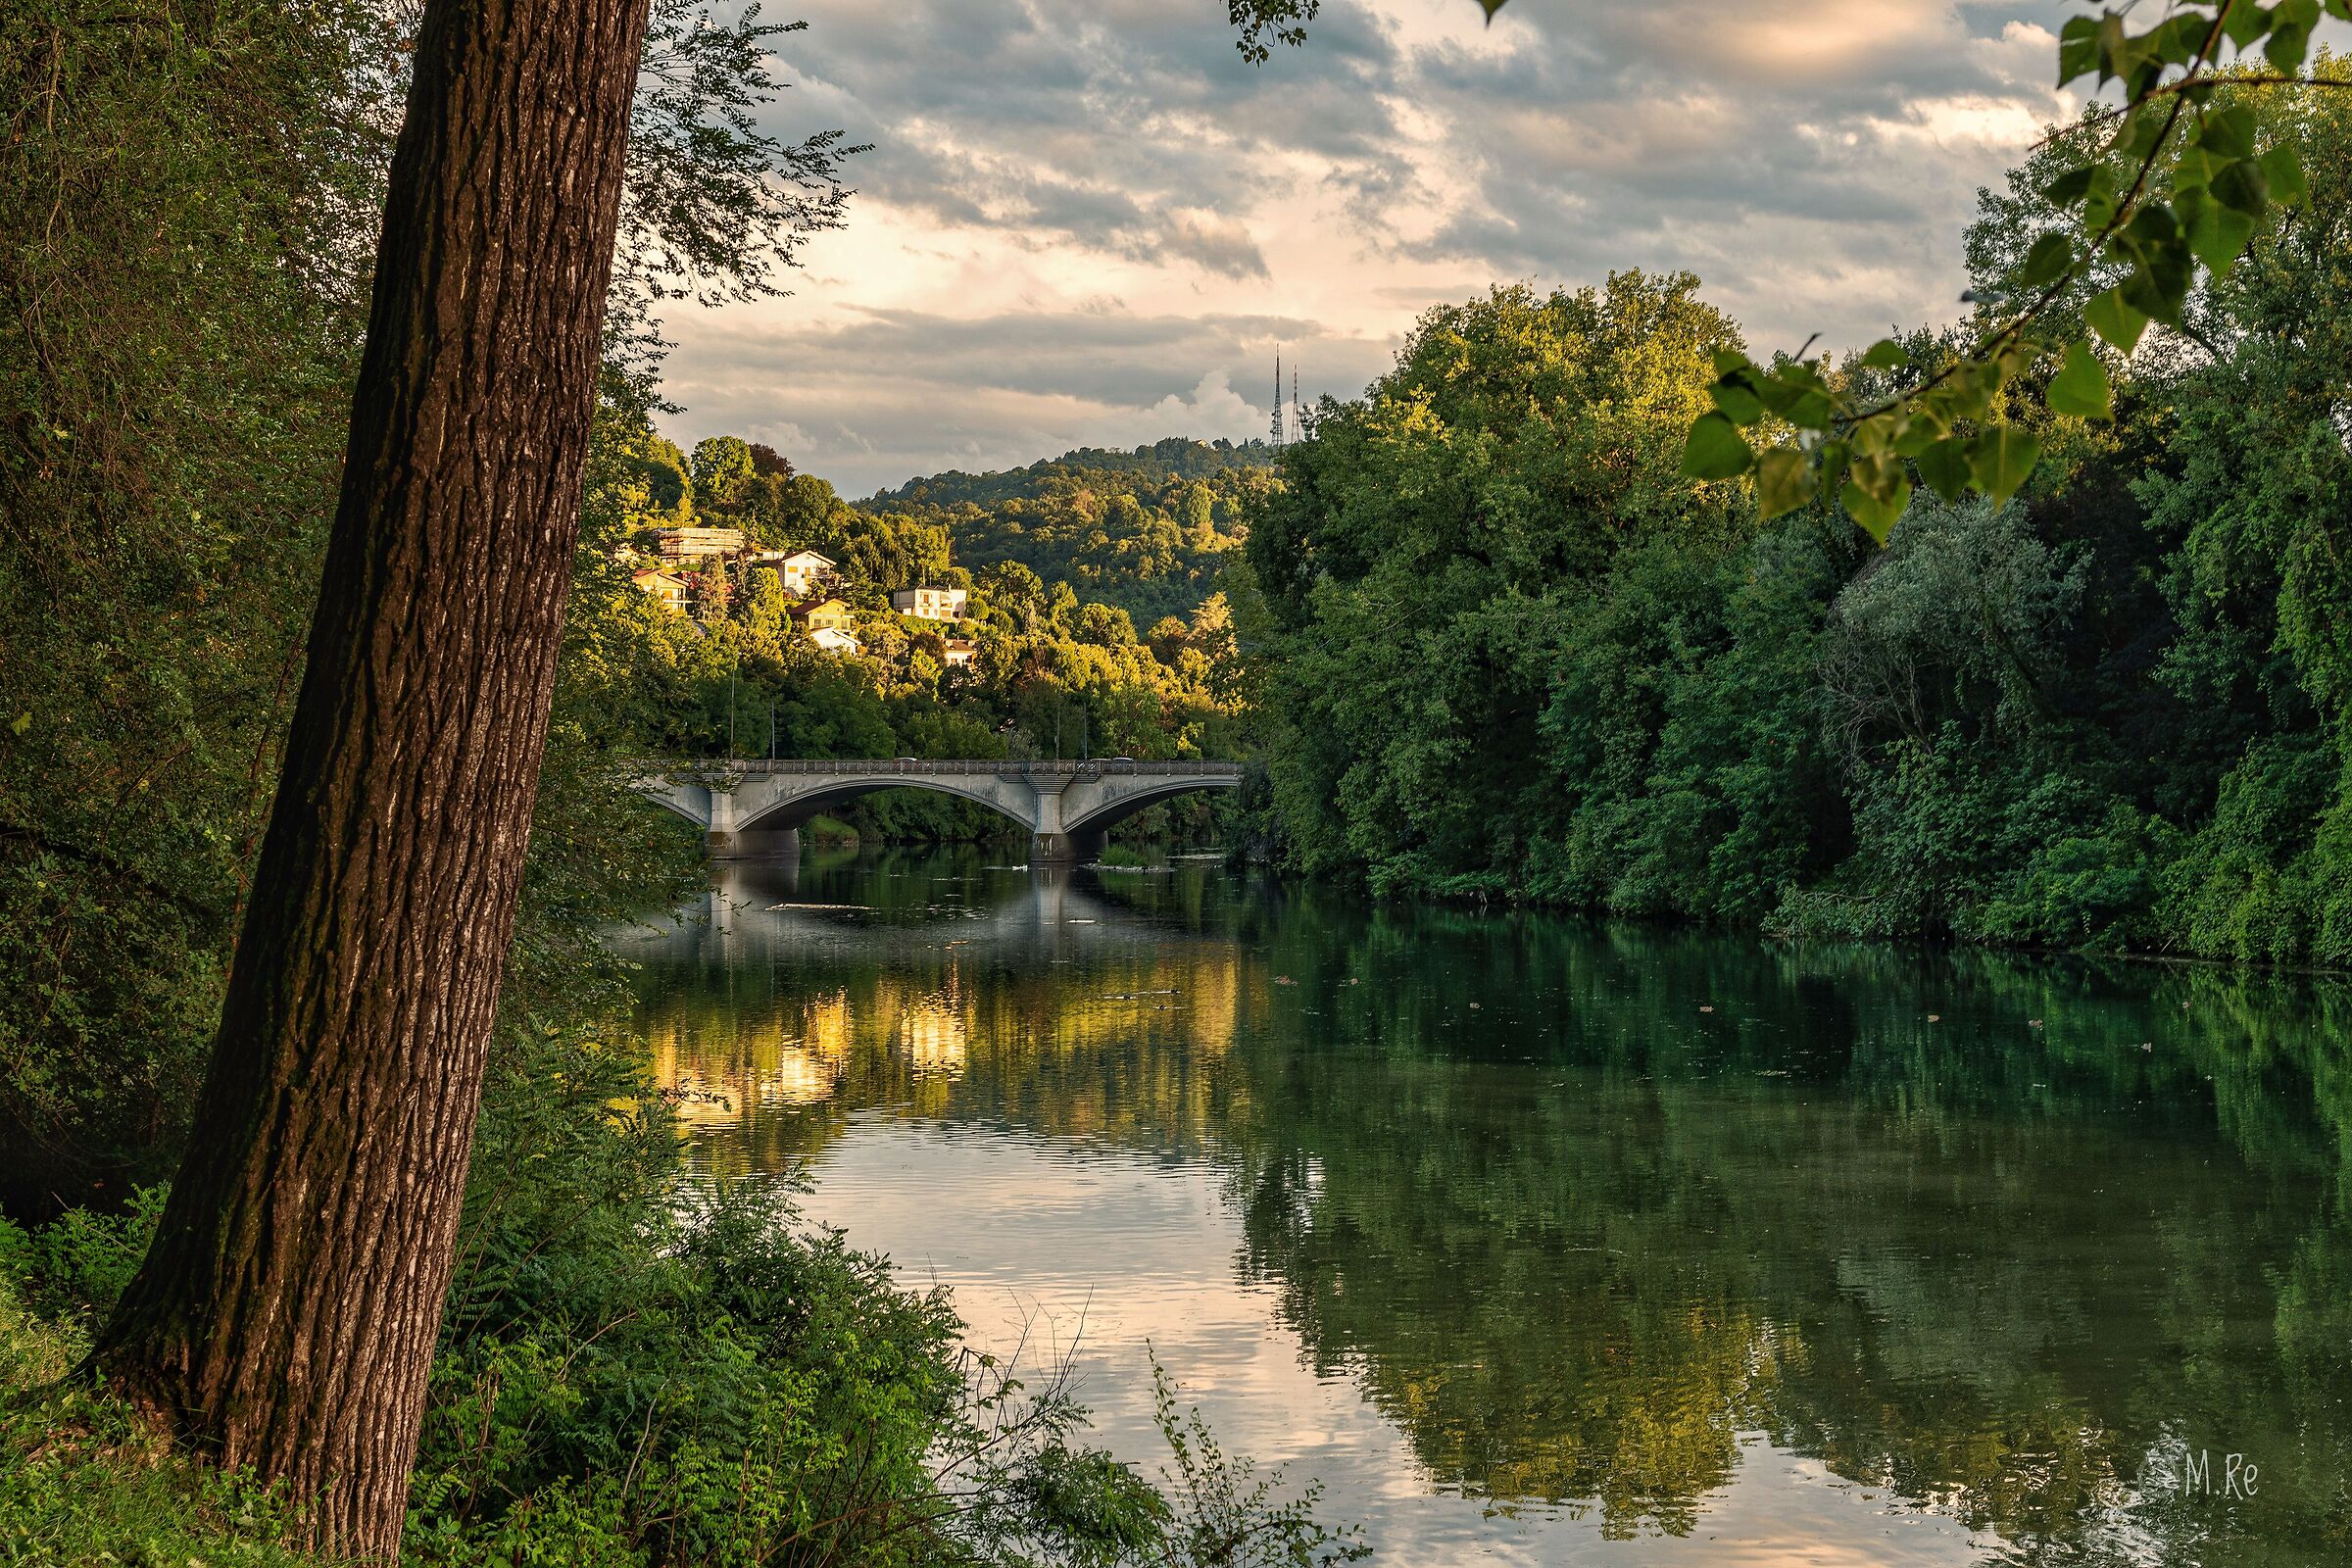 The Sassi bridge - Turin...